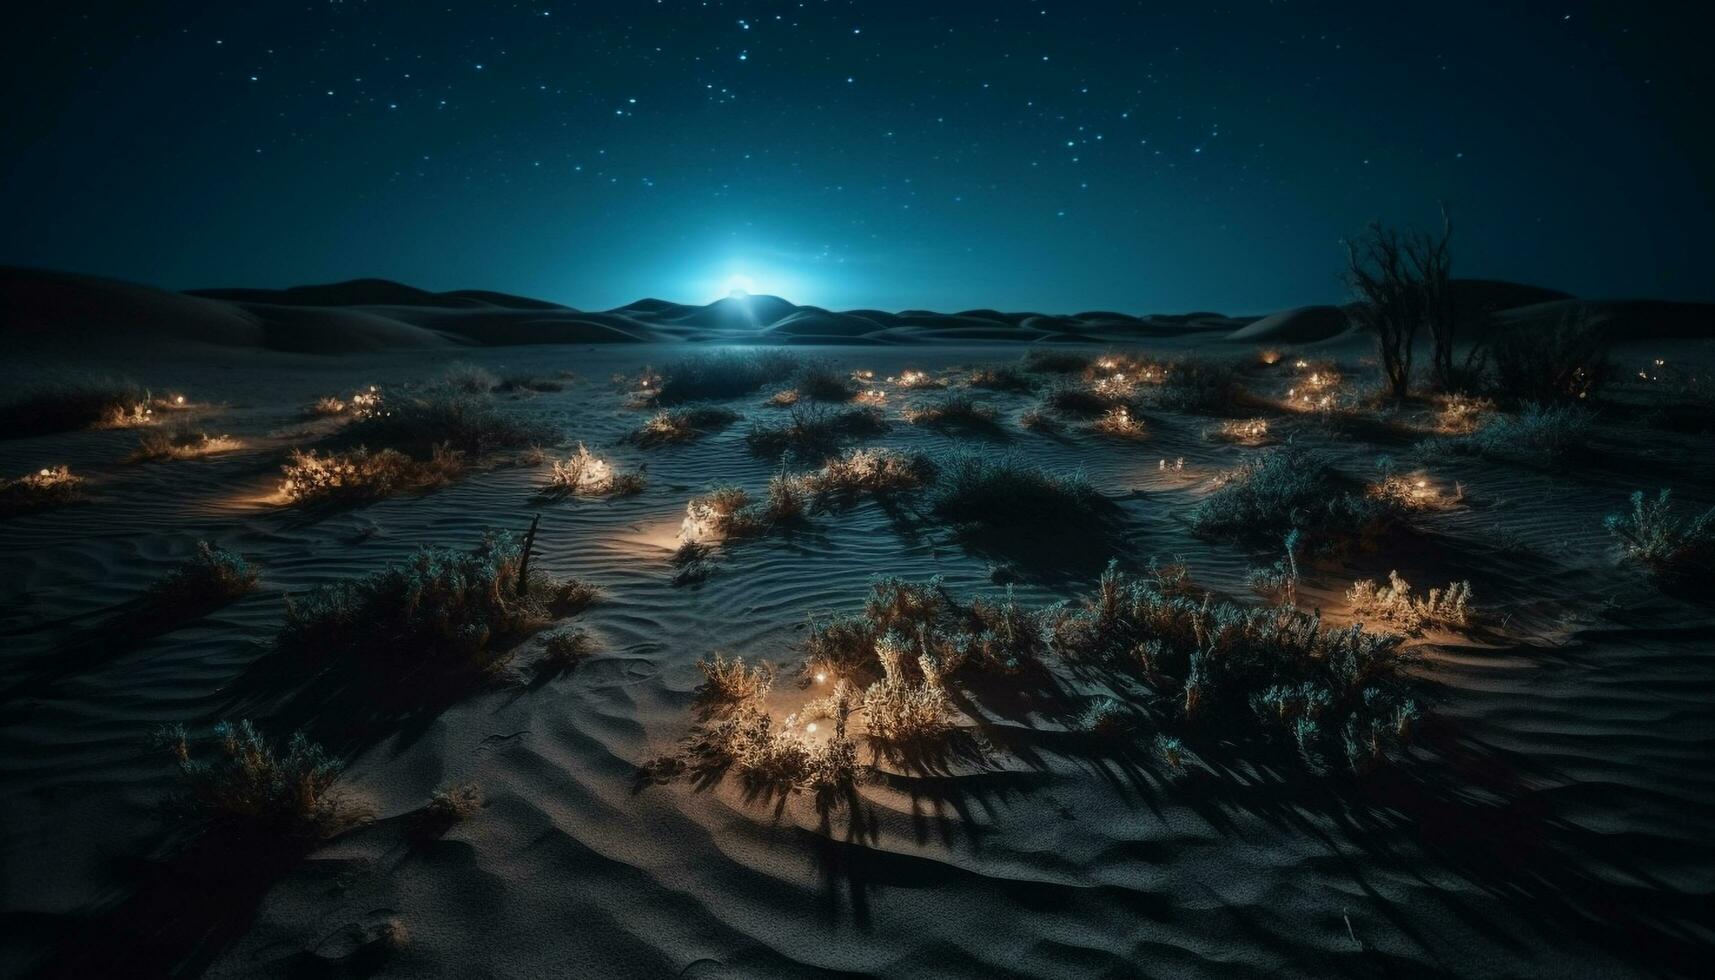 Milky Way illuminates tranquil sand dune landscape generated by AI photo